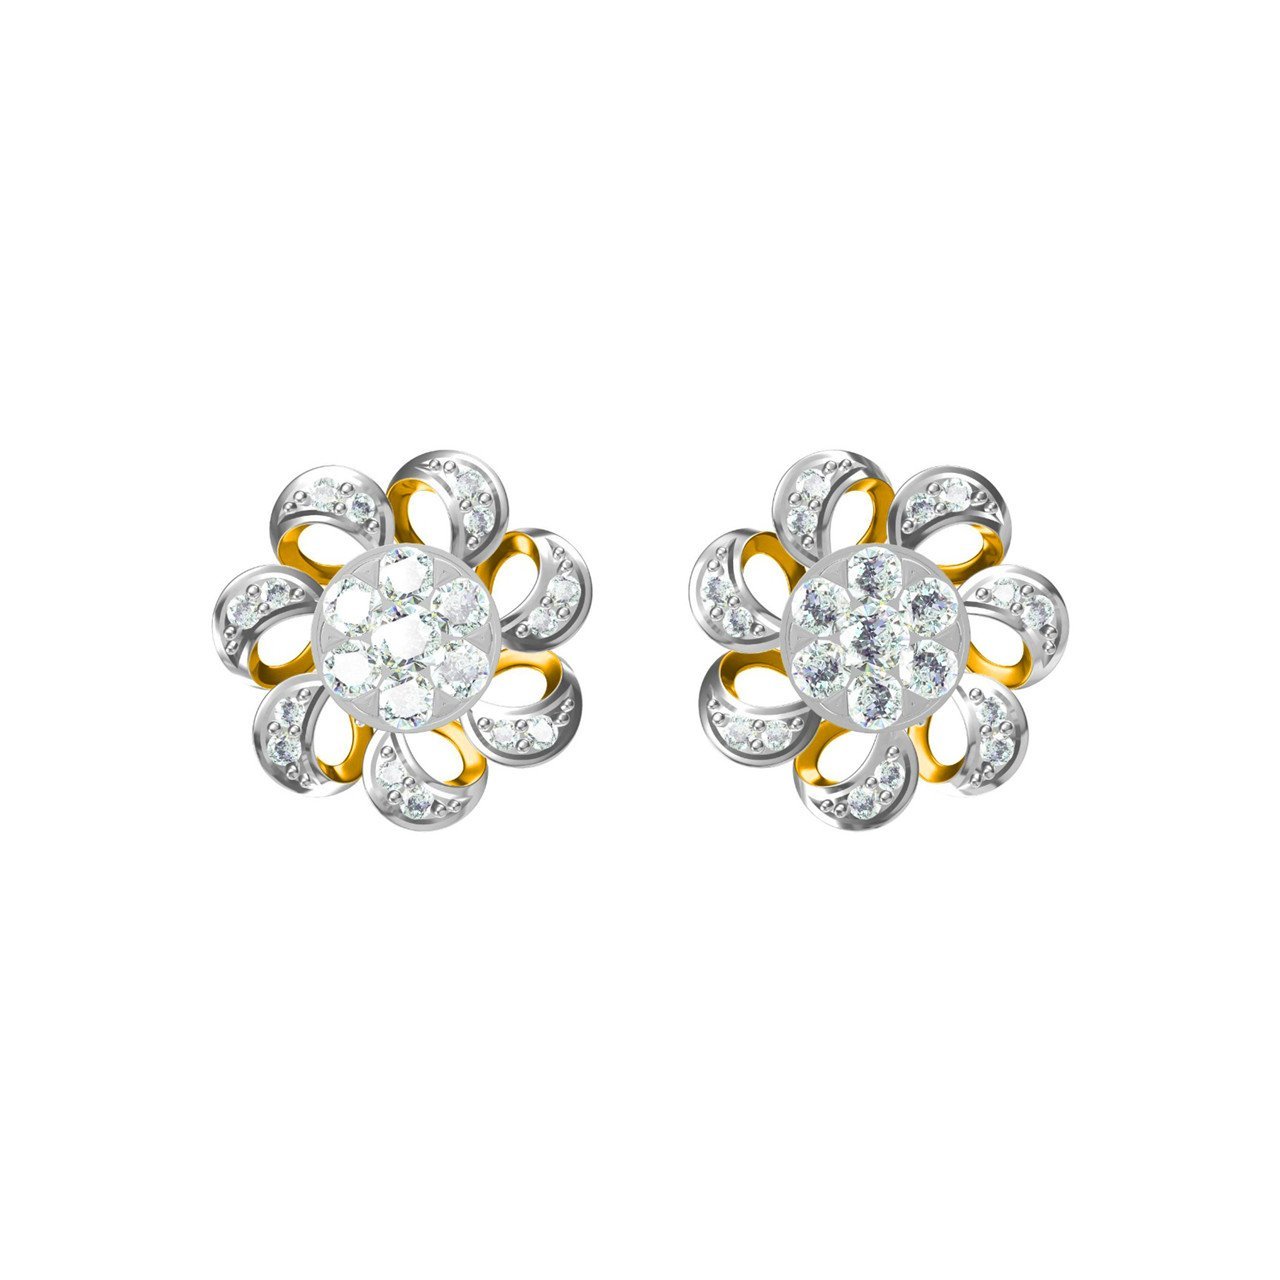 Clear Flake Earrings With Diamonds The Earrings - Pearlkraft